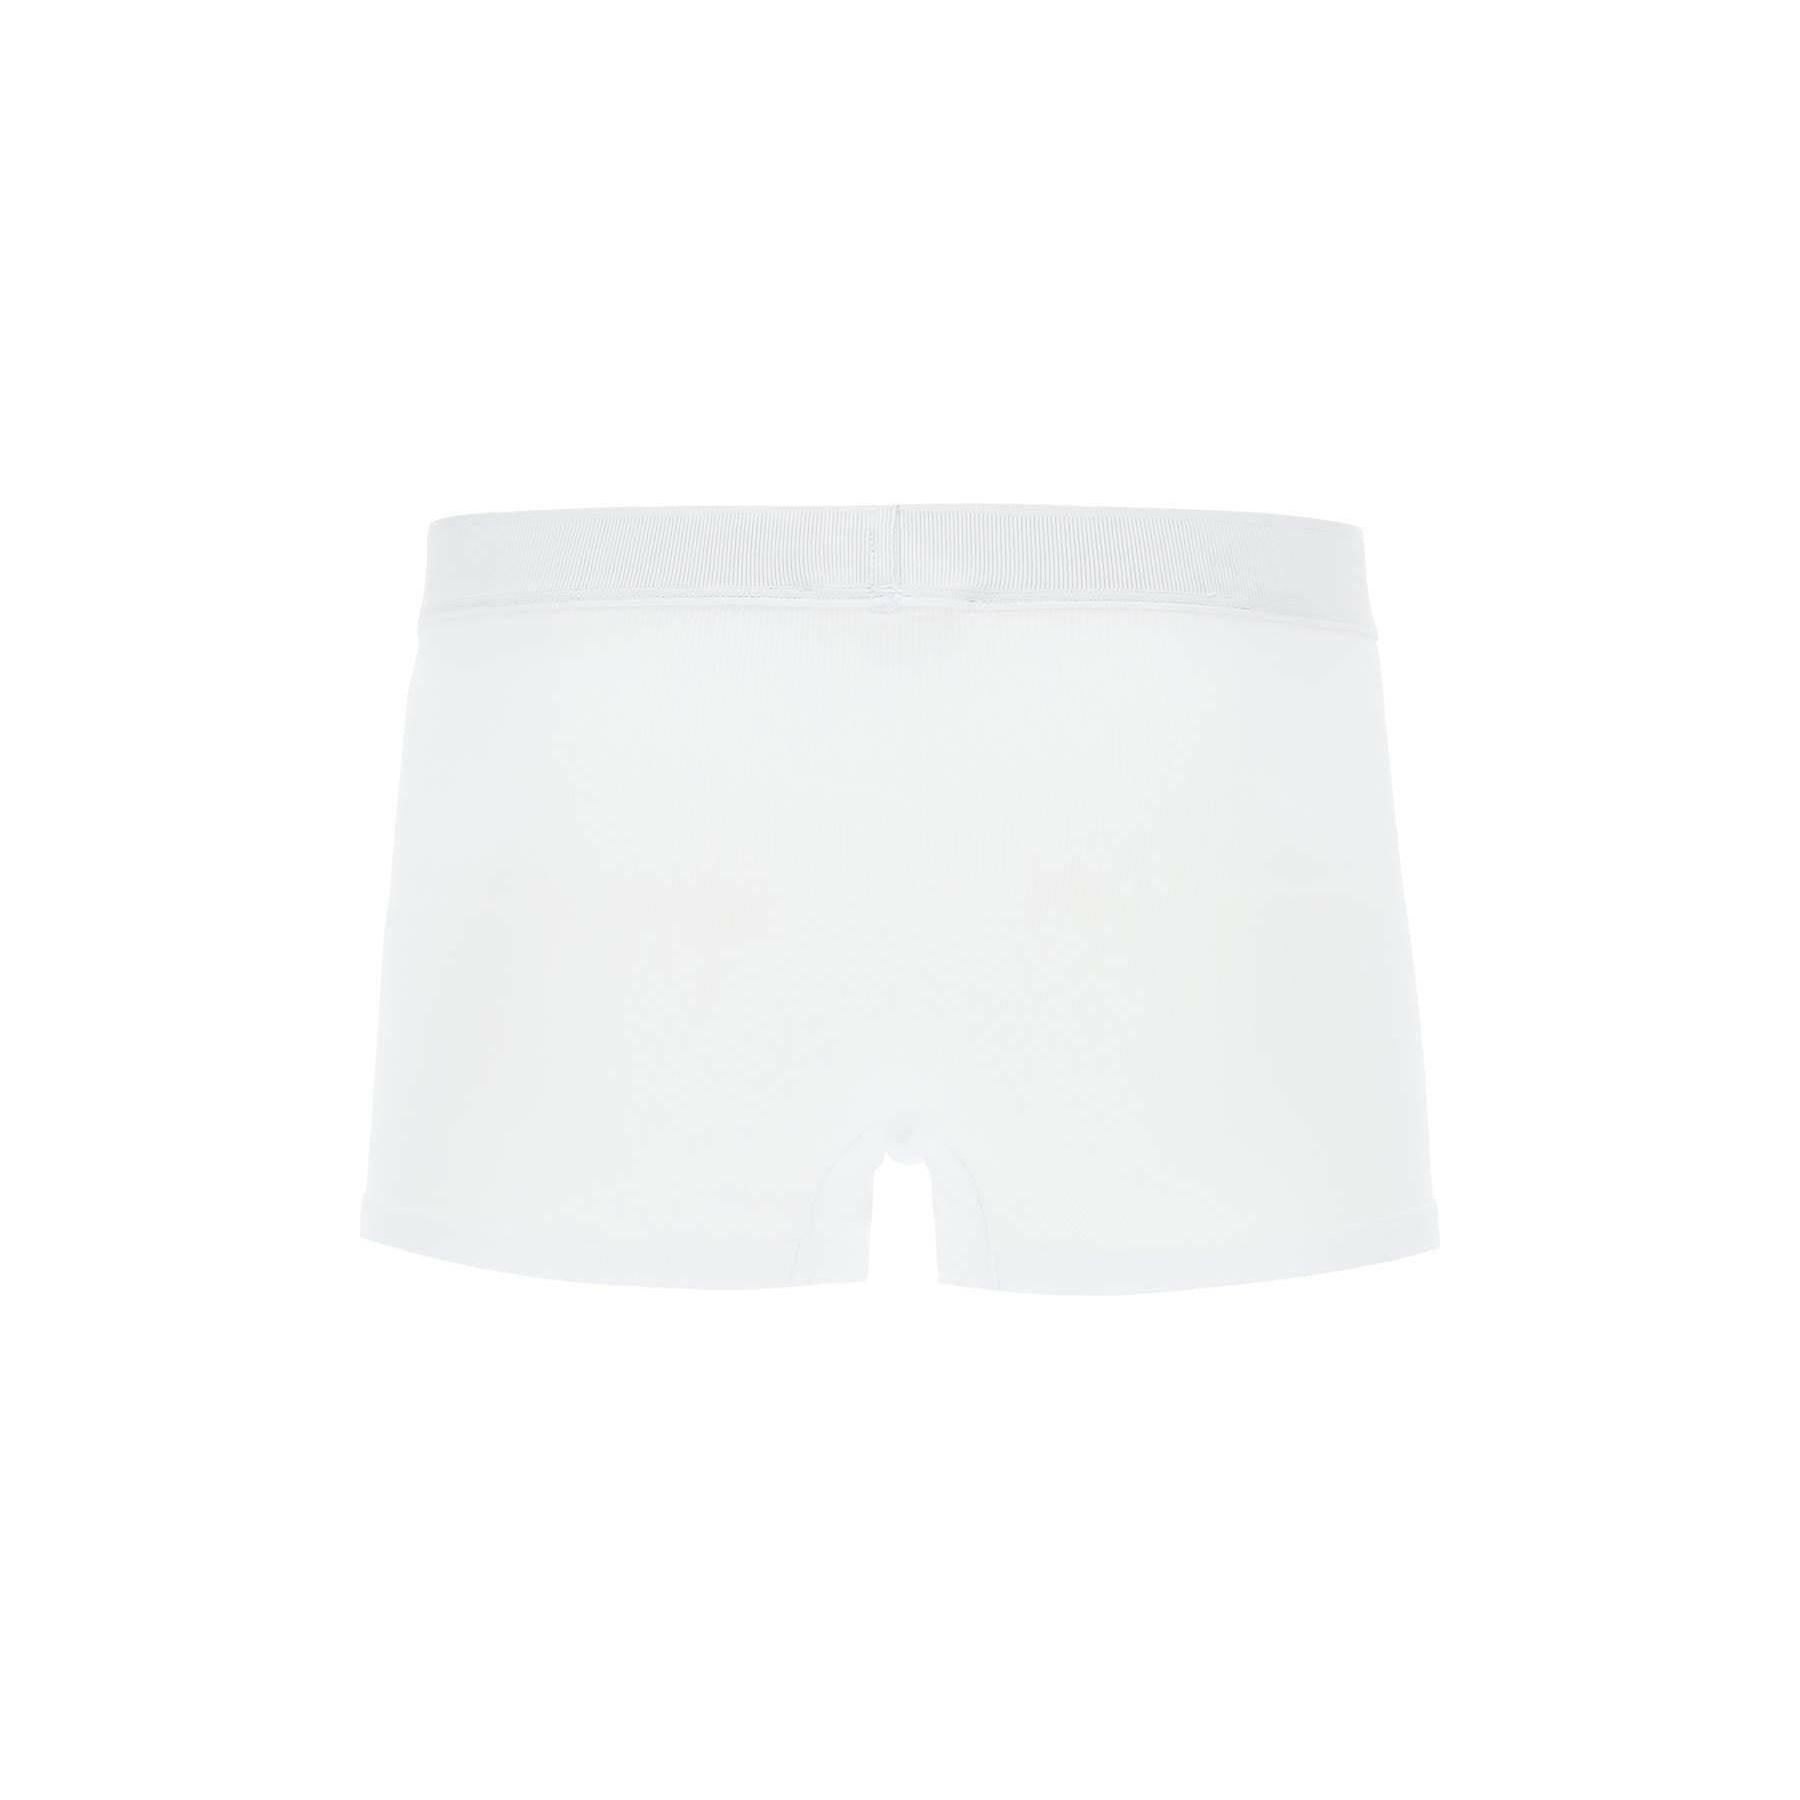 Optical White Cotton Stretch Intimate Boxer Shorts With Jacquard Logo VERSACE JOHN JULIA.